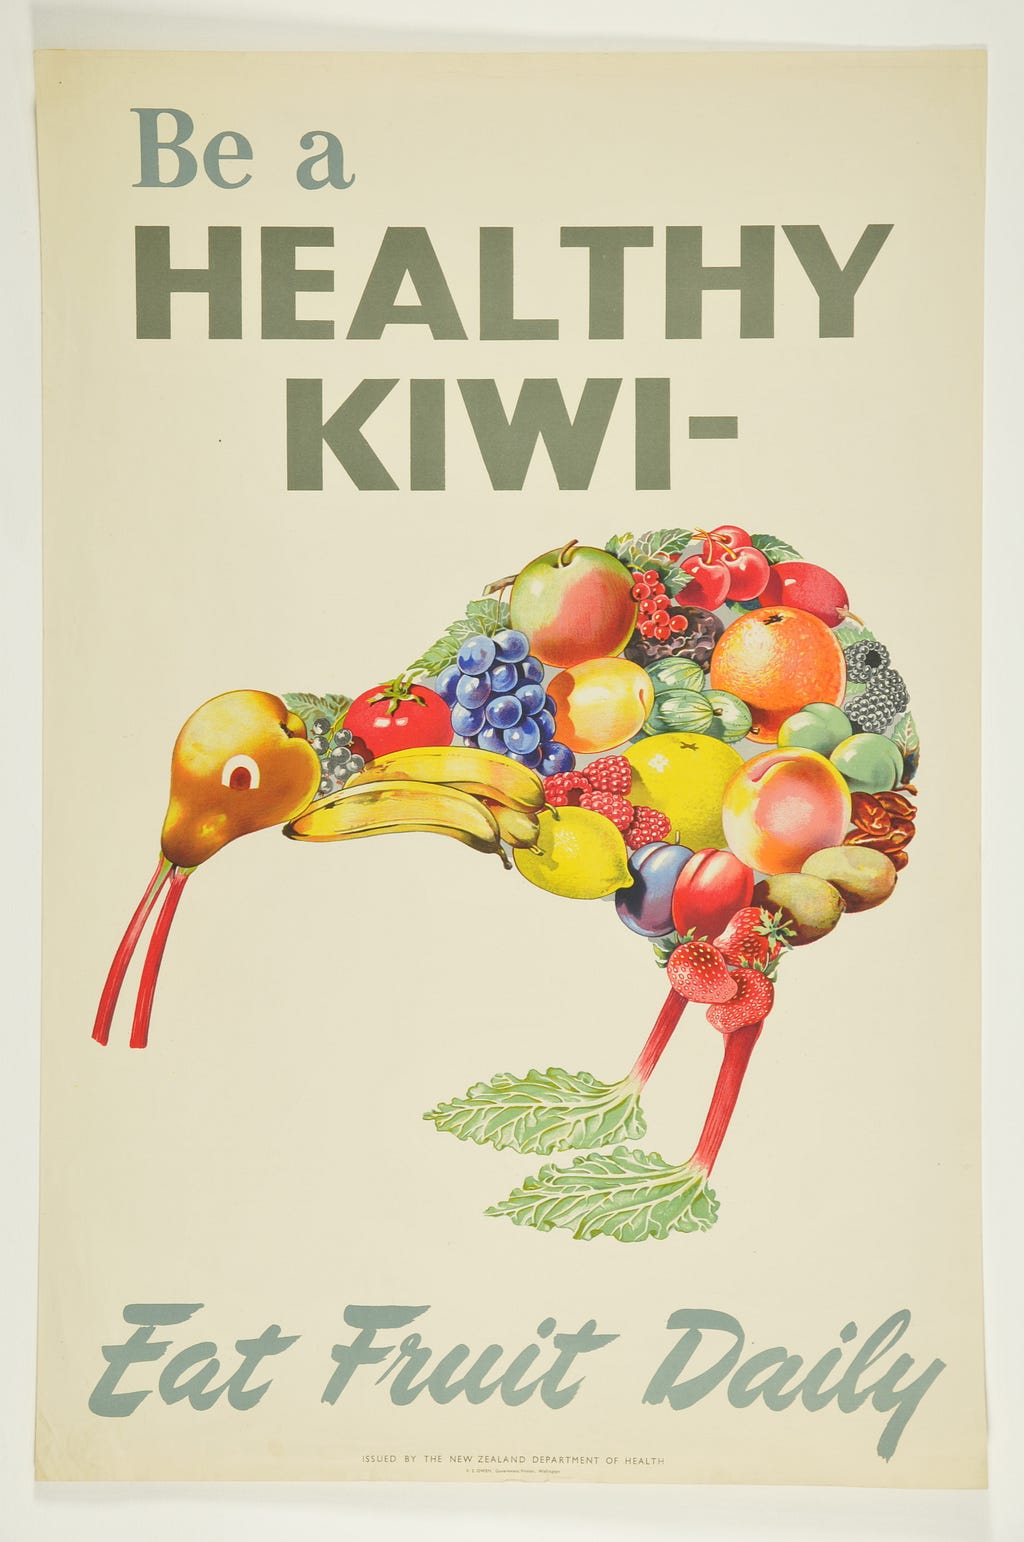 Be a Healthy Kiwi